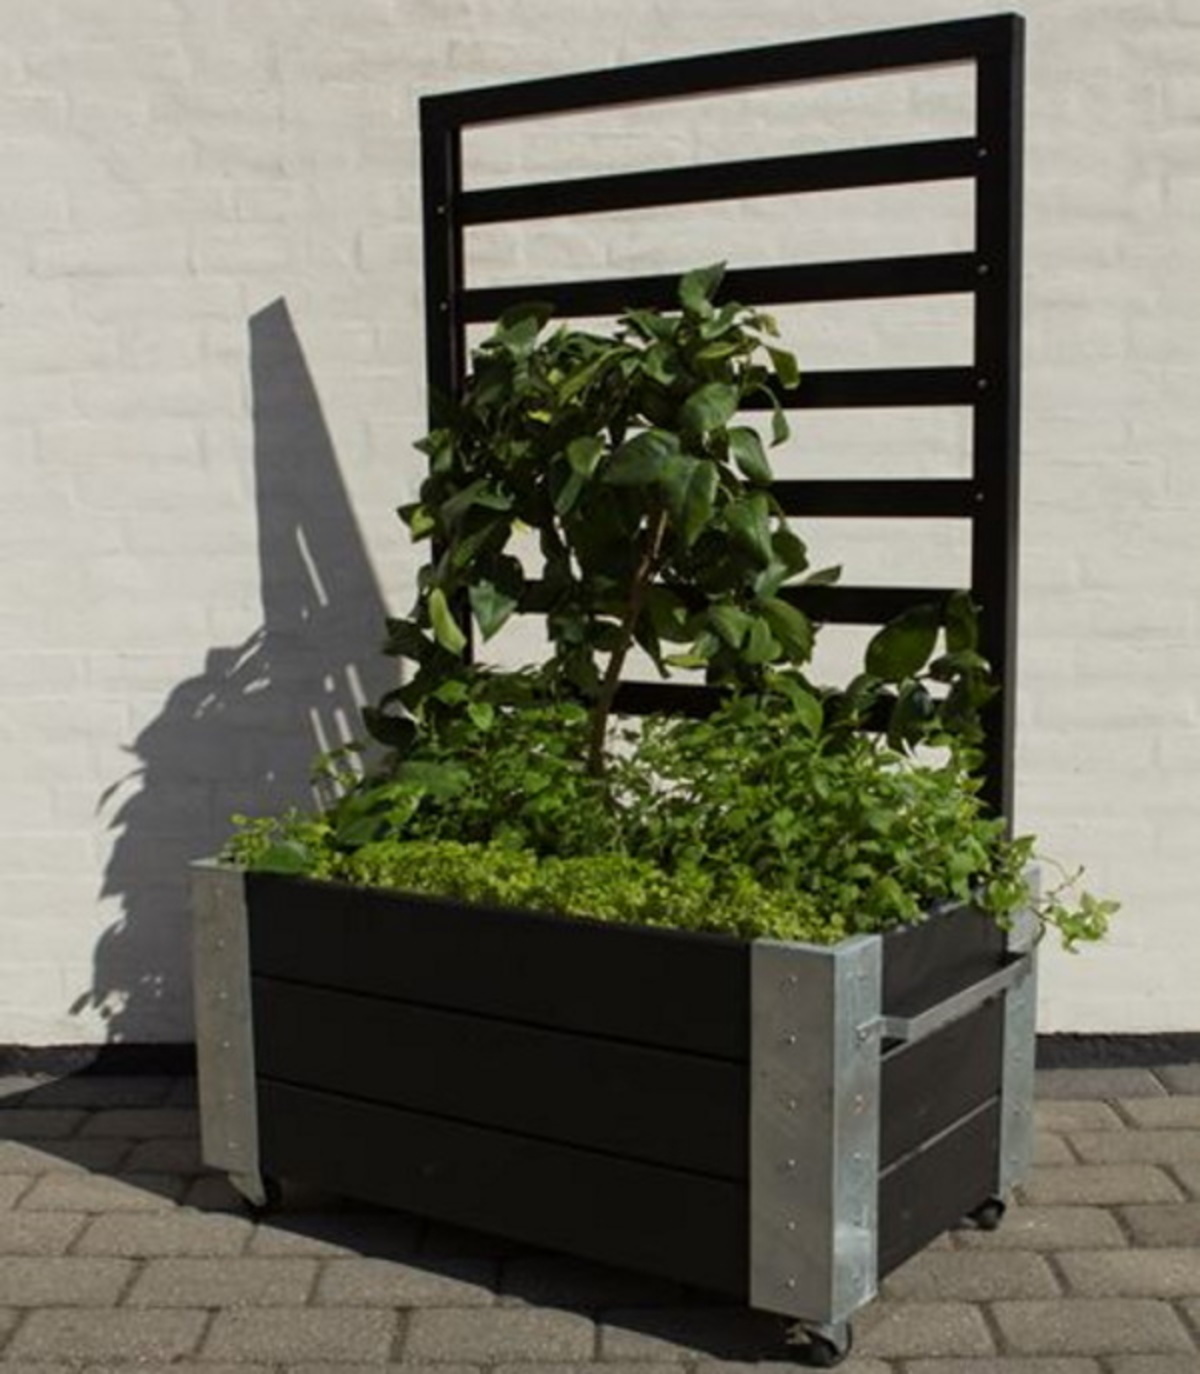 Trellis planter on wheels - wood and galvanized steel